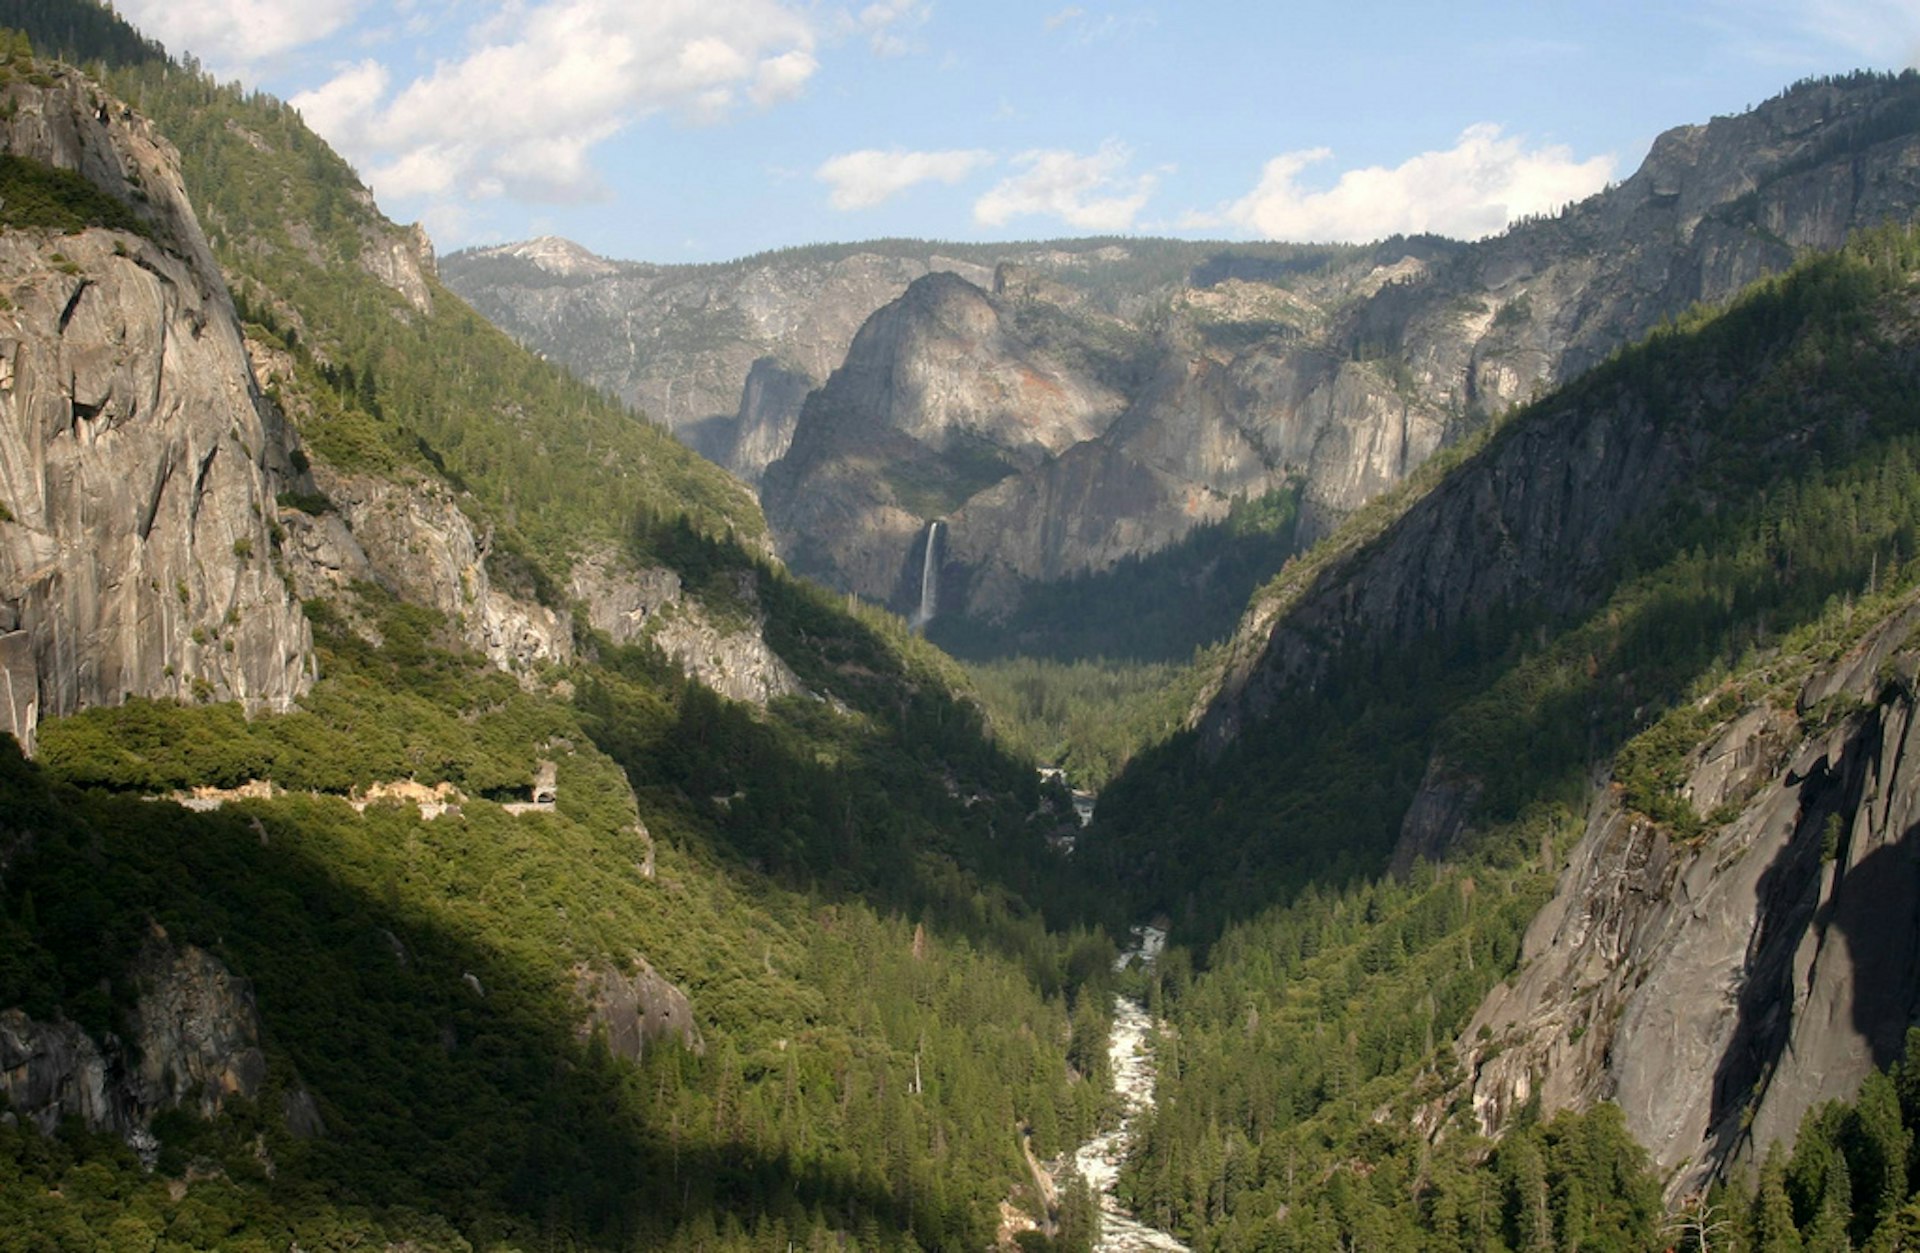 View down Yosemite Valley. Image by Frank Kovalchek / CC BY 2.0 